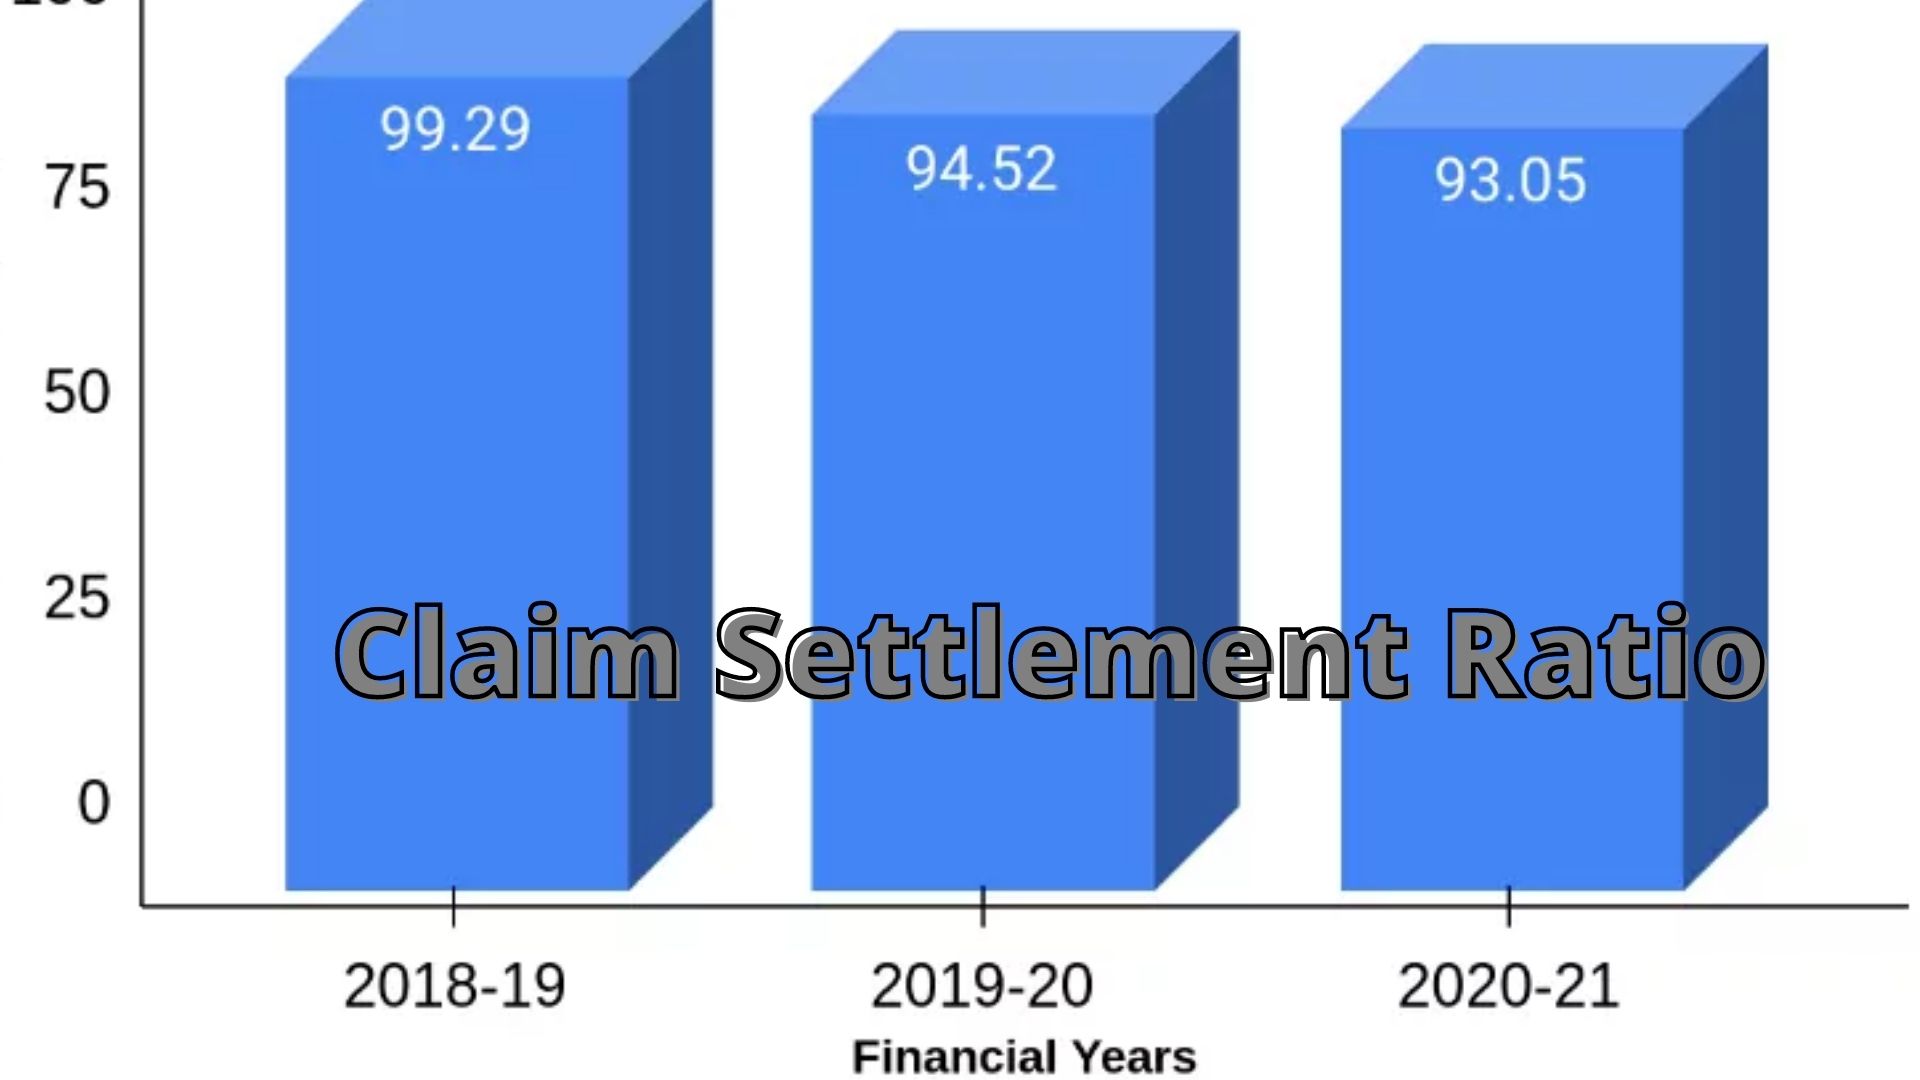 Claim settlement ratio